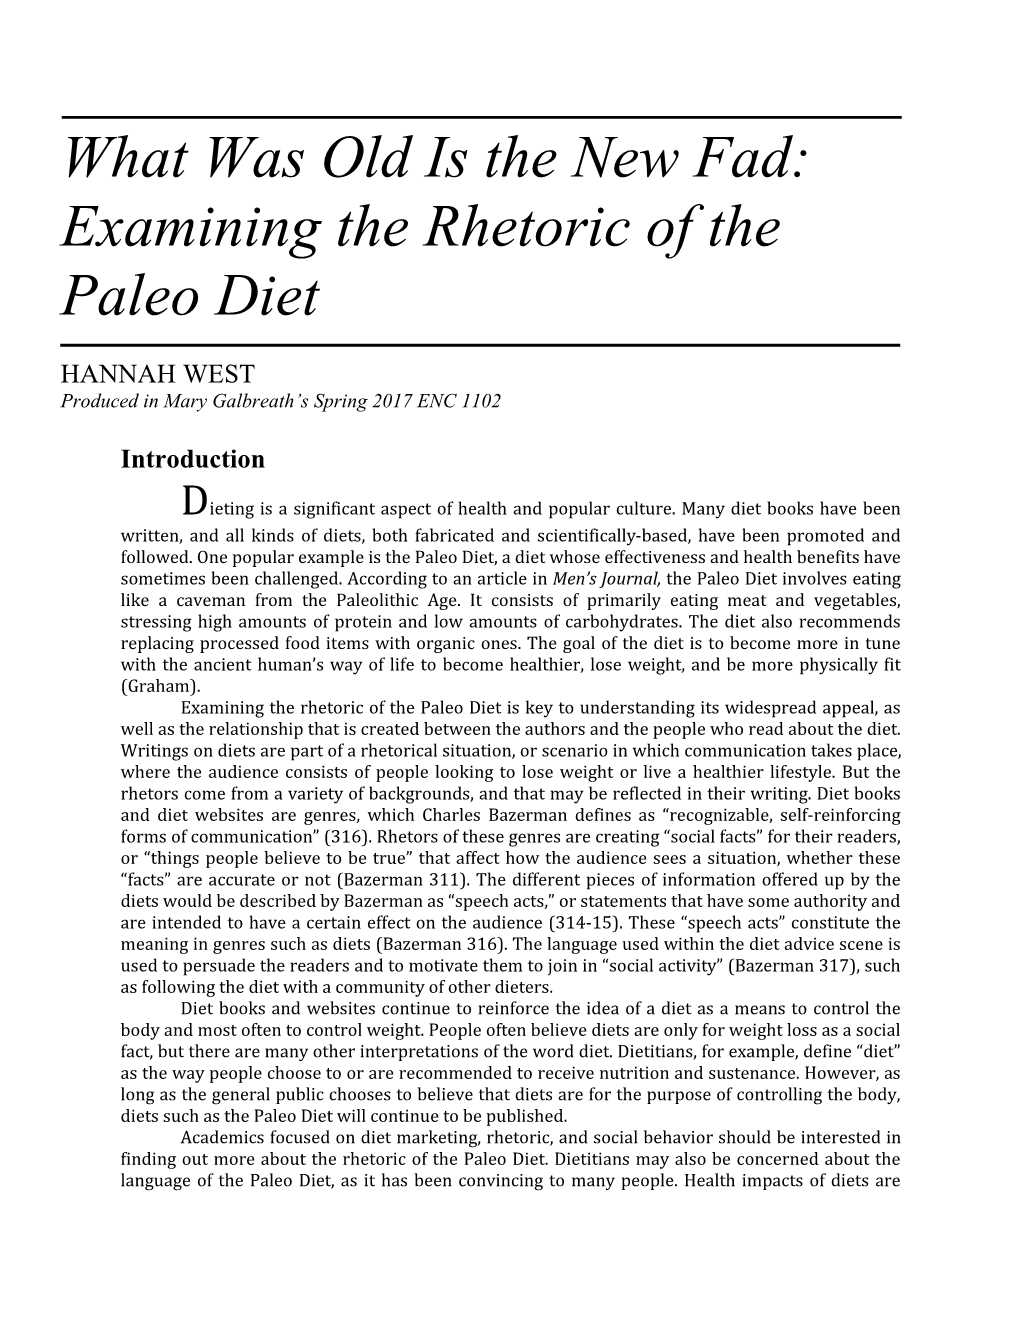 Examining the Rhetoric of the Paleo Diet